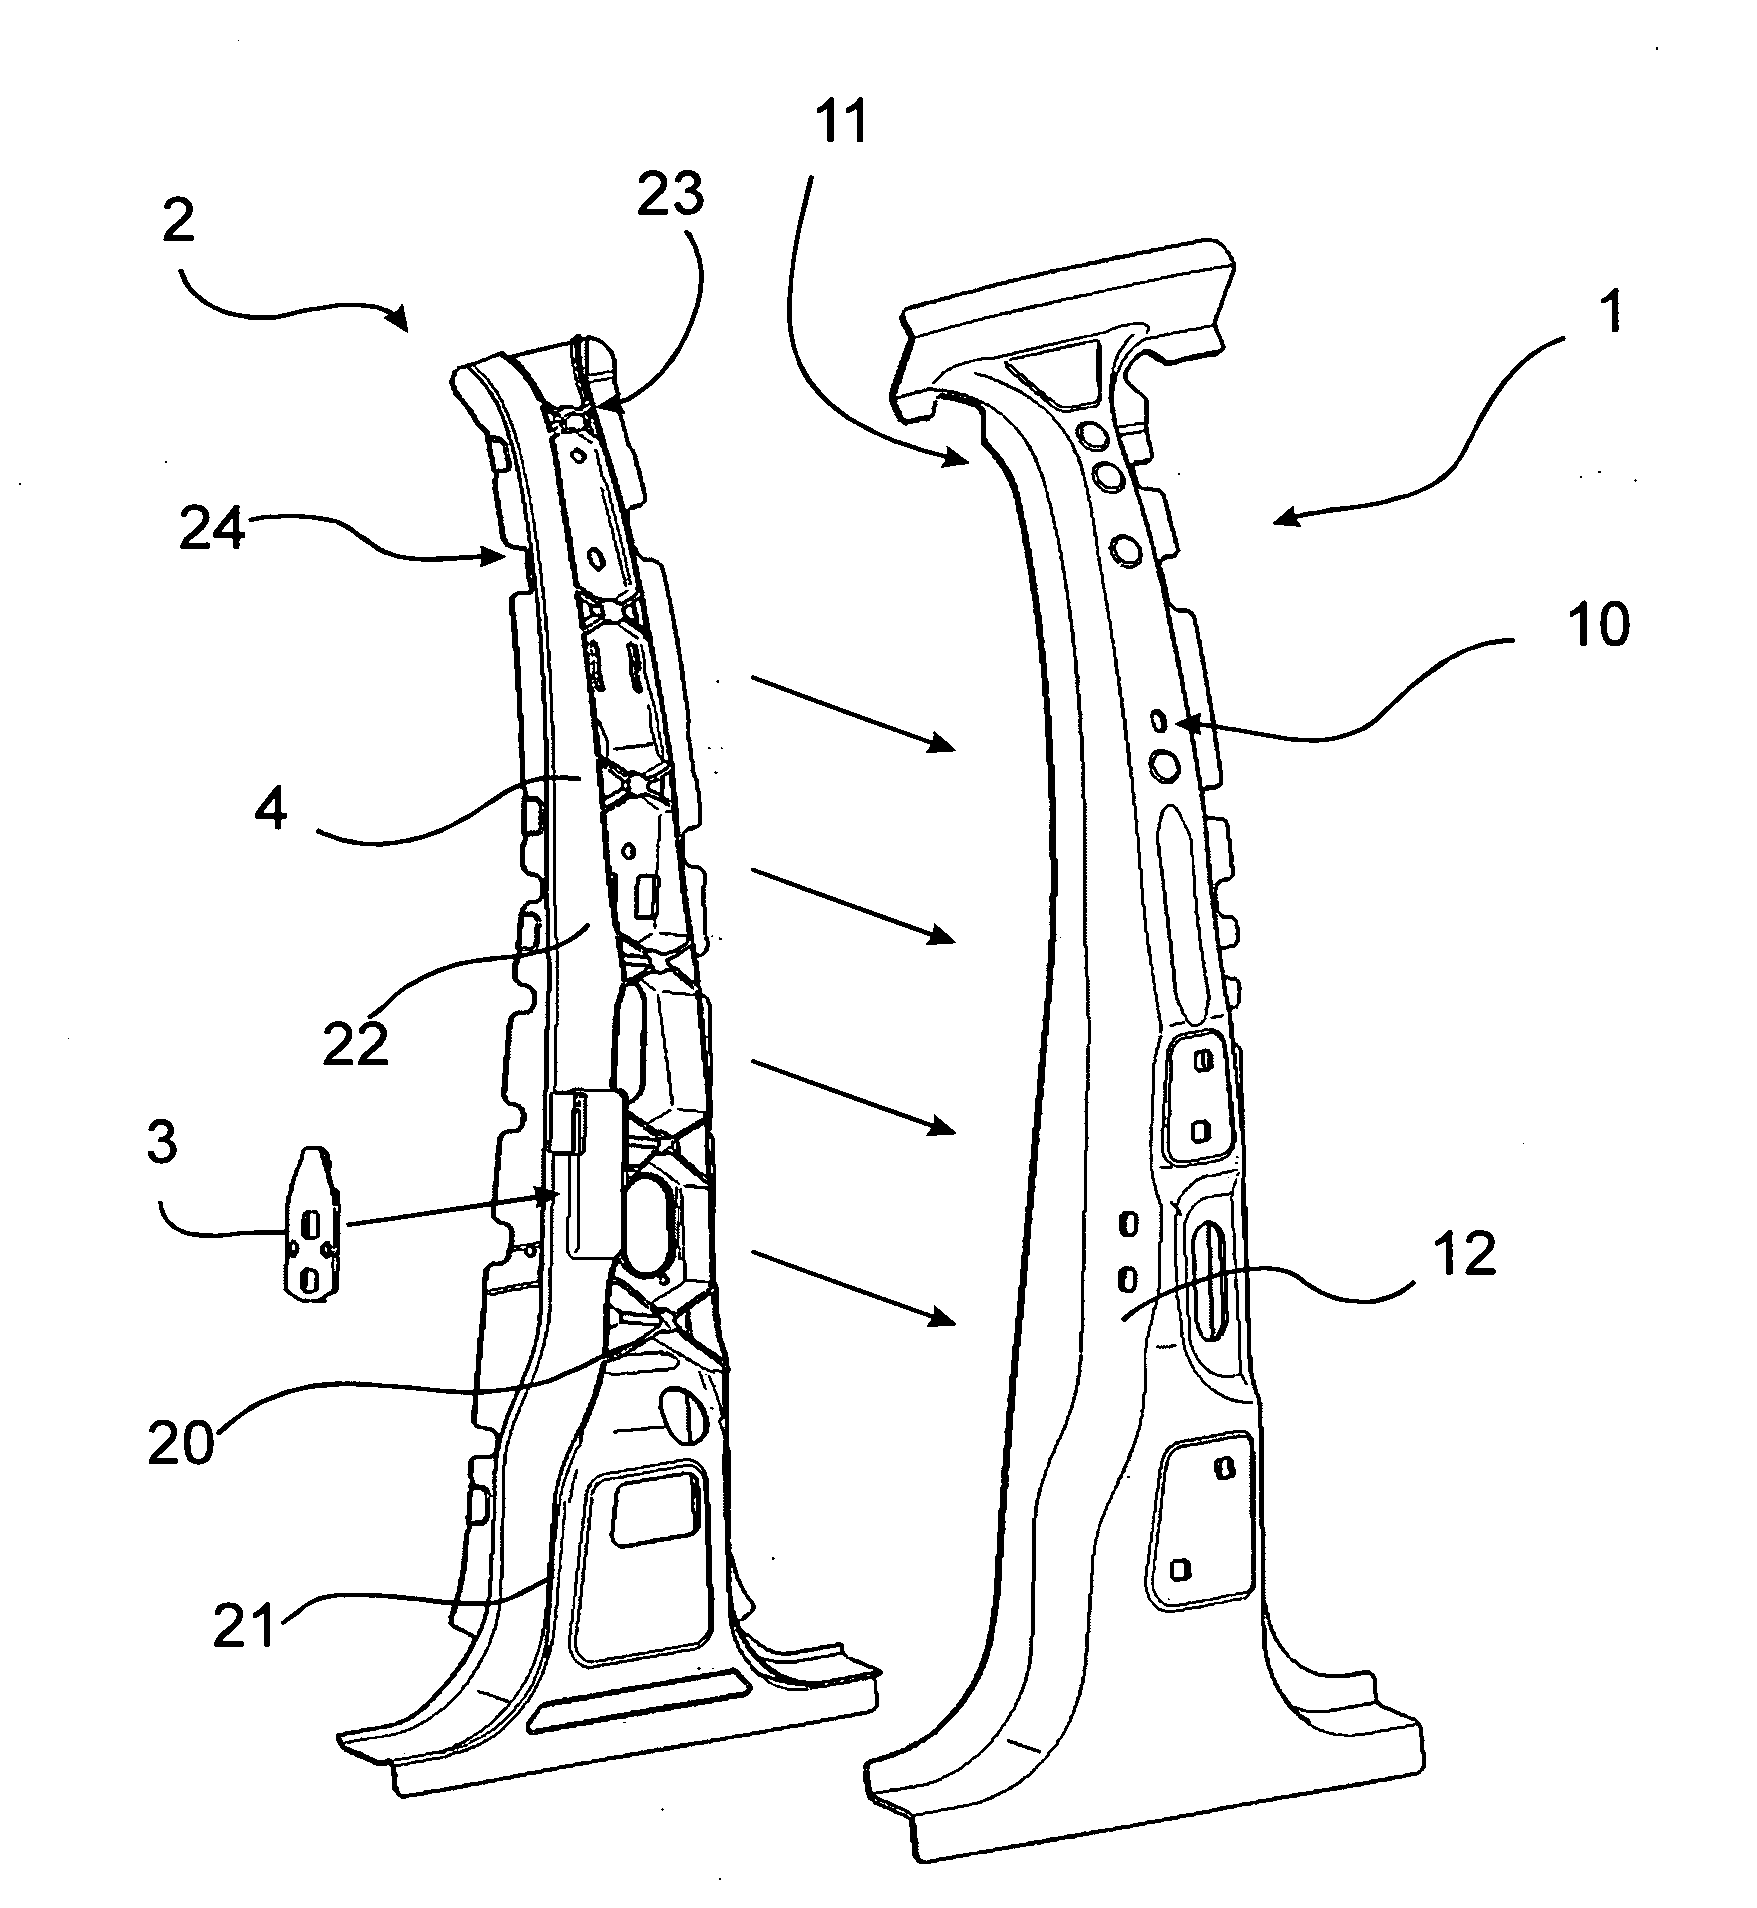 Vehicle part with structural reinforcement part